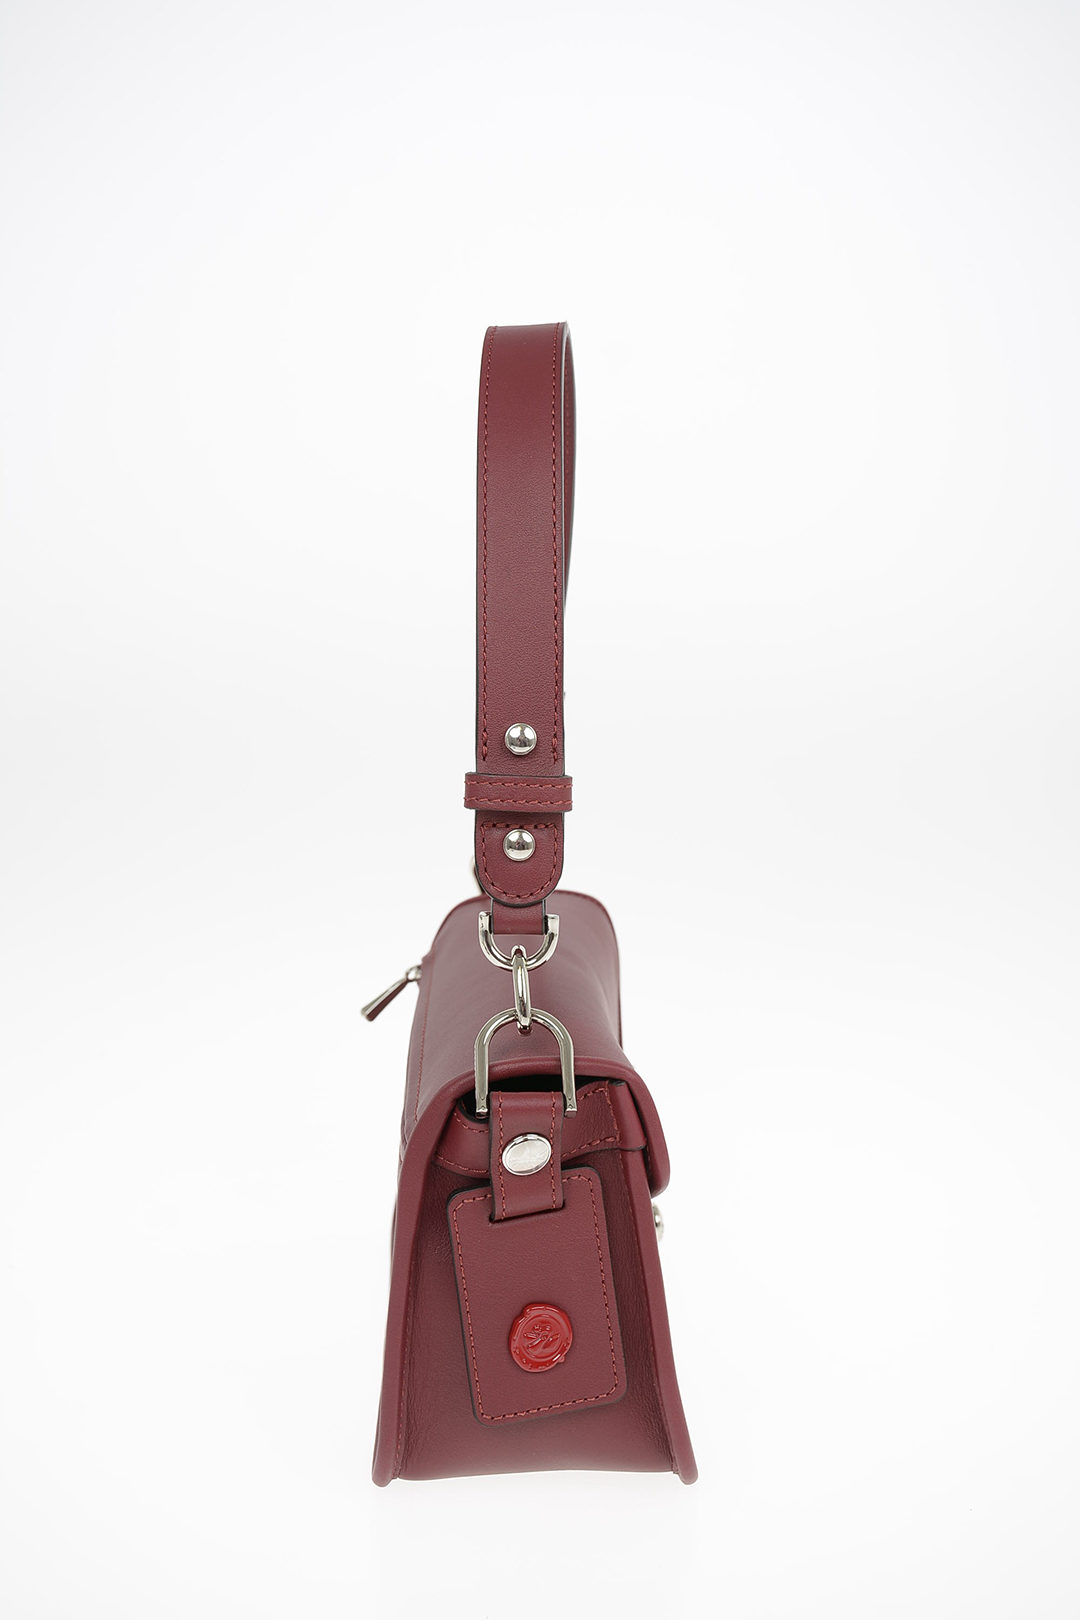 Purse Straps Replacement, KOMHPS Leather Handbag Crossbody Shoulder Strap  Adjustable for Longchamp Bag Women (Upgraded)